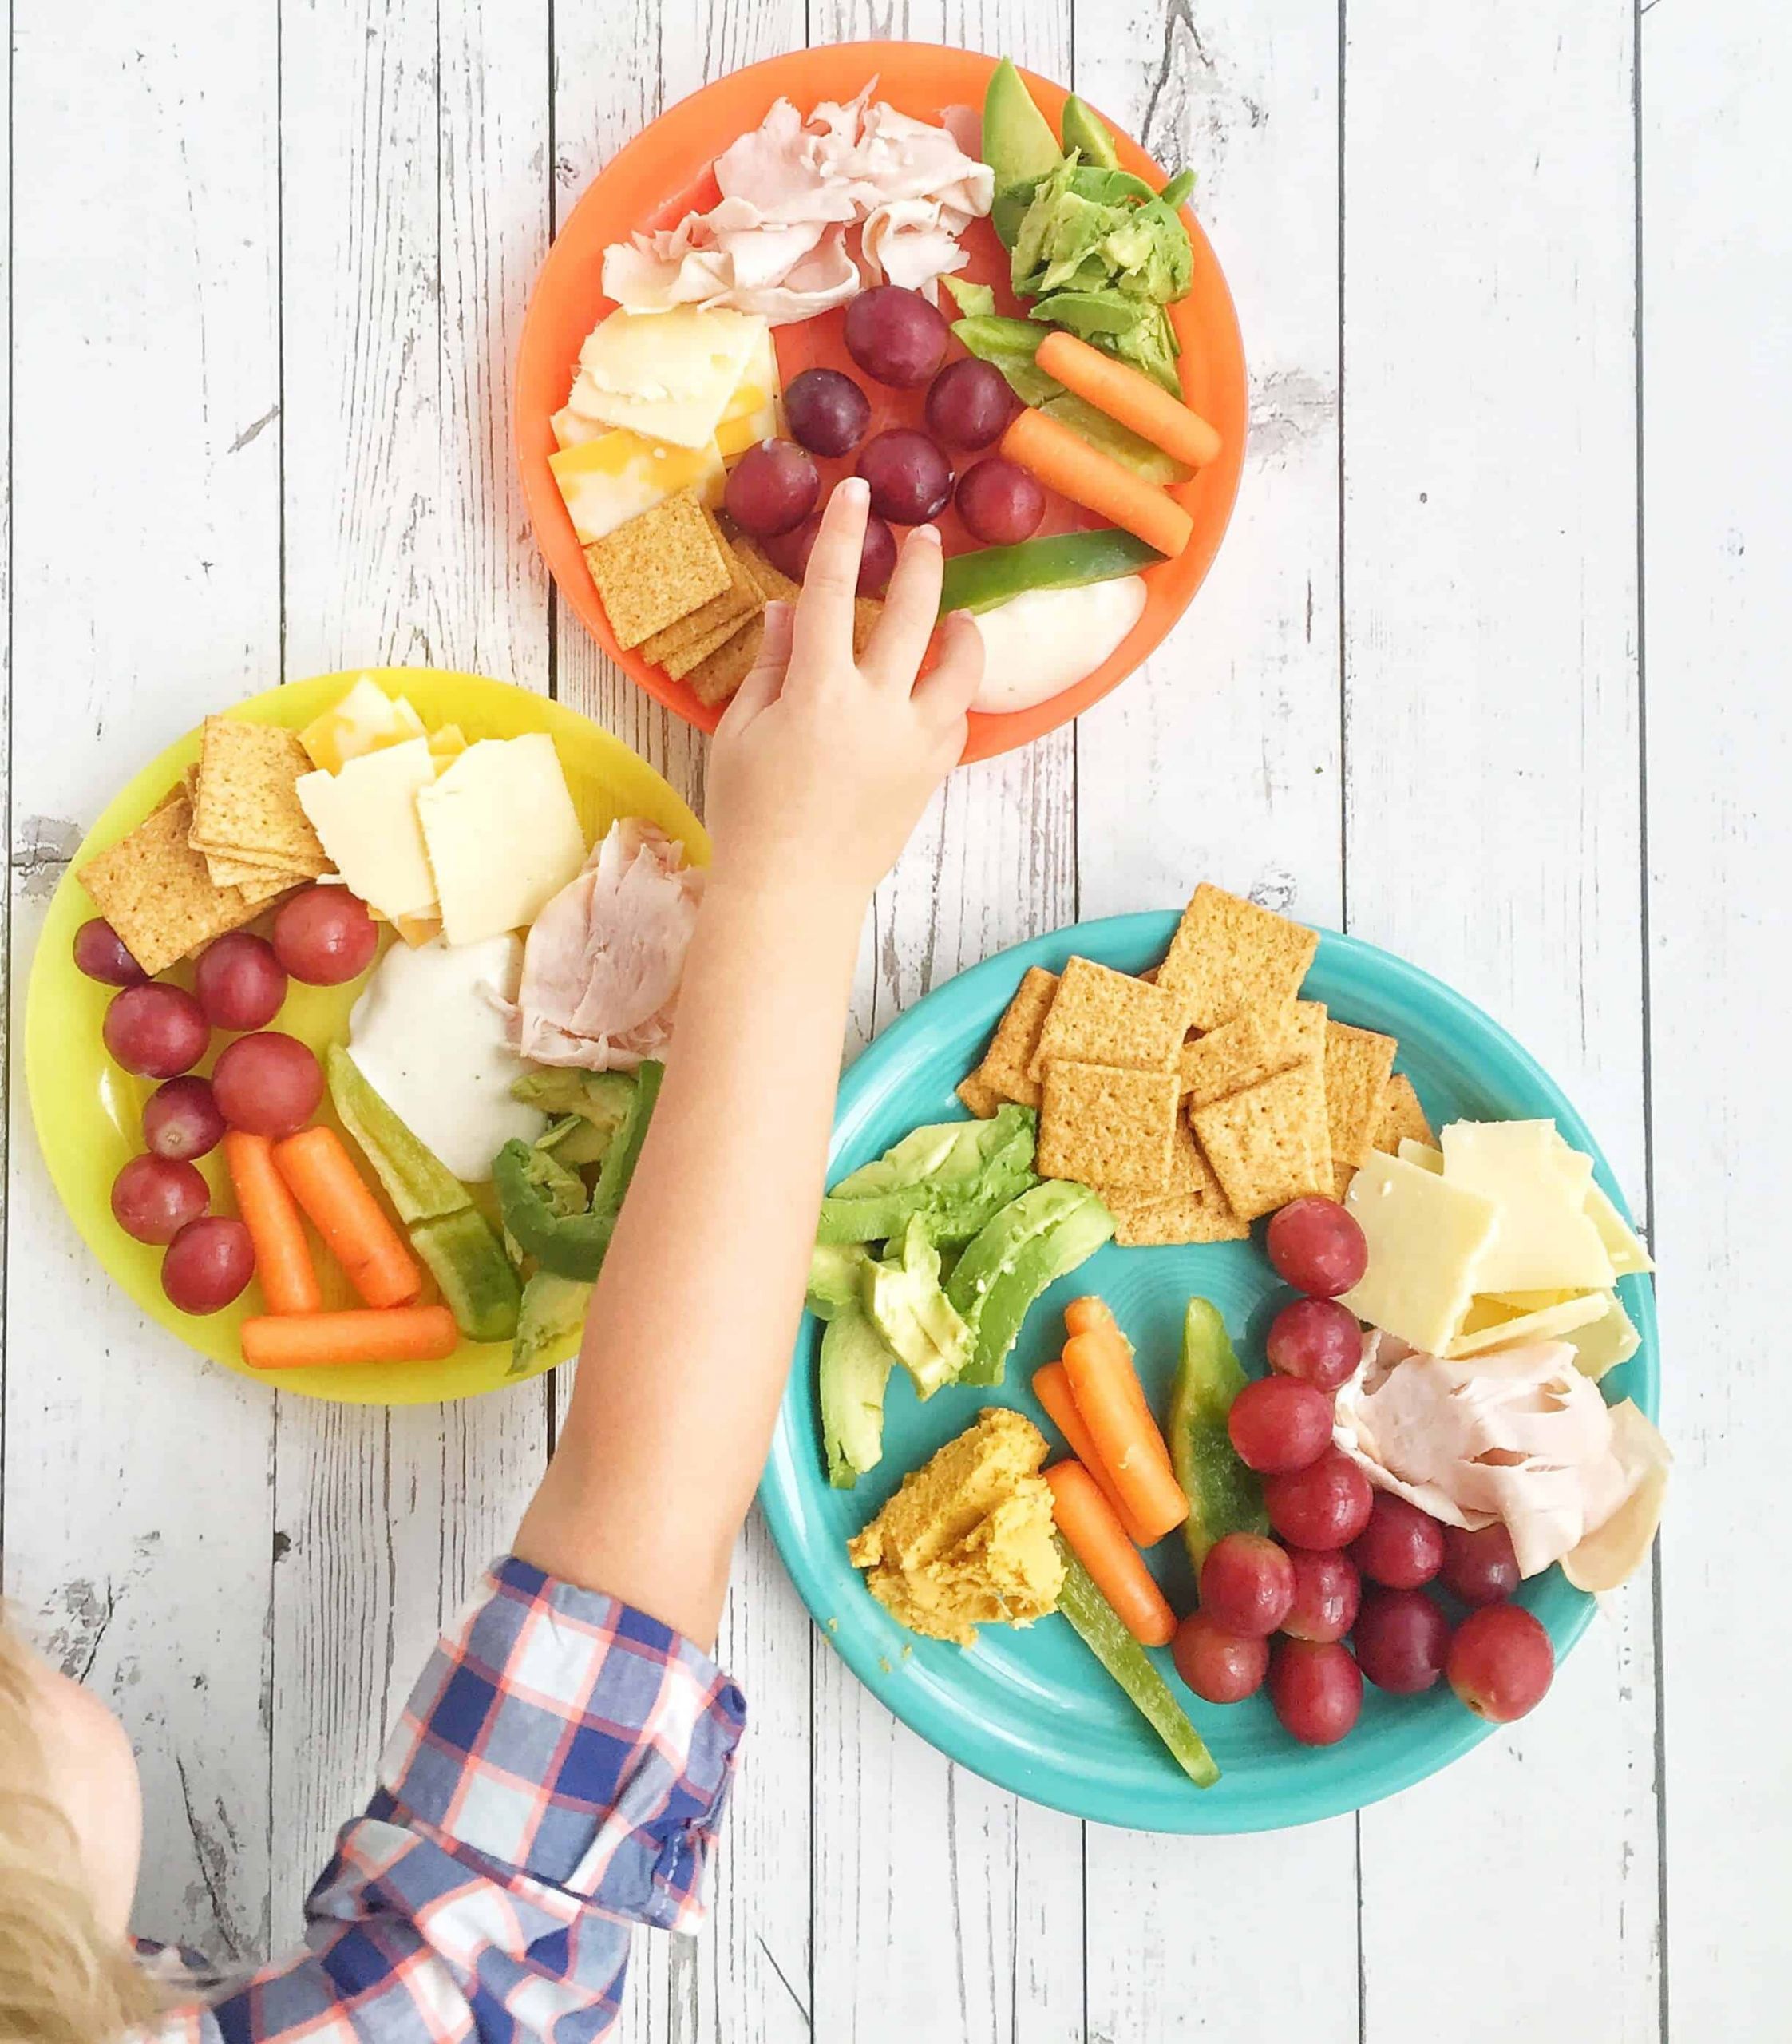 15 Best Ideas Healthy Dinner for Kids